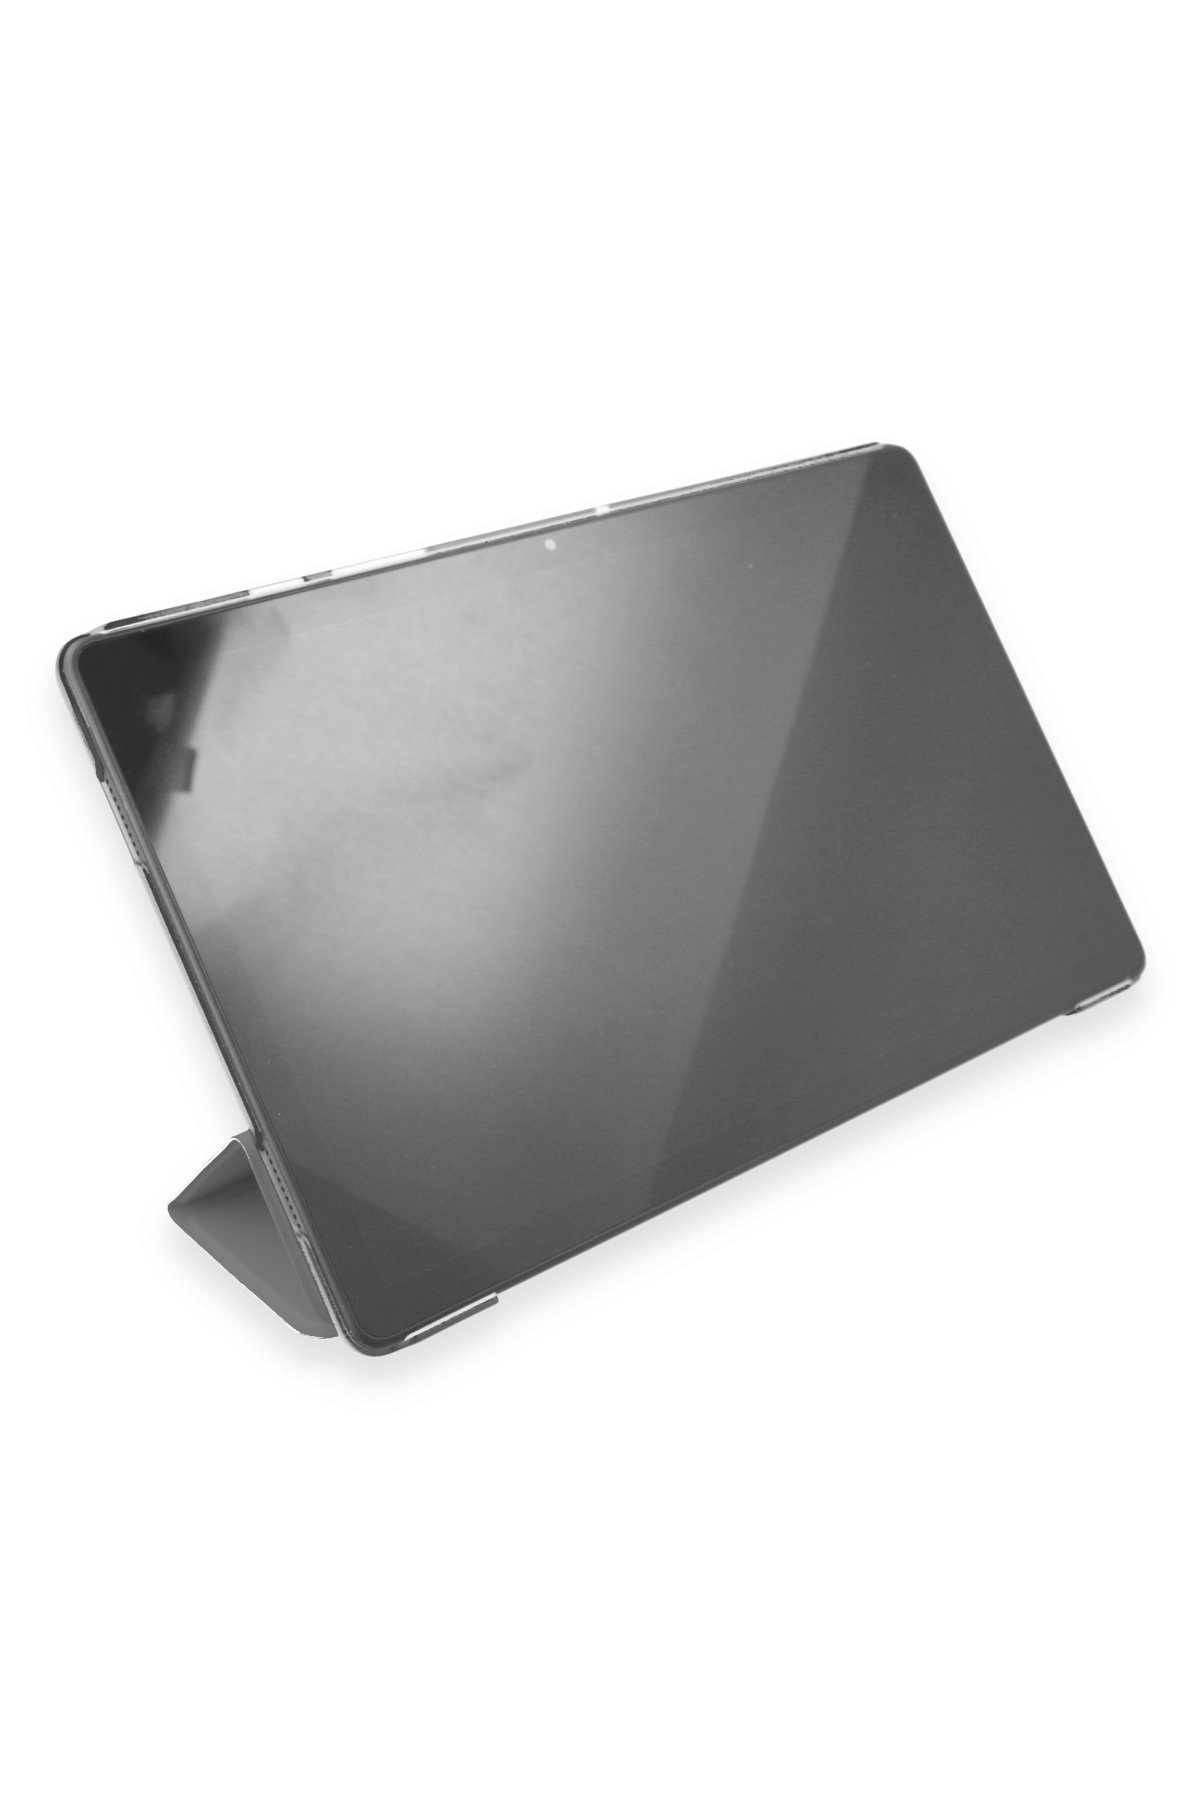 Newface iPad Air 4 10.9 Kılıf Amazing Tablet Kapak - Kırmızı